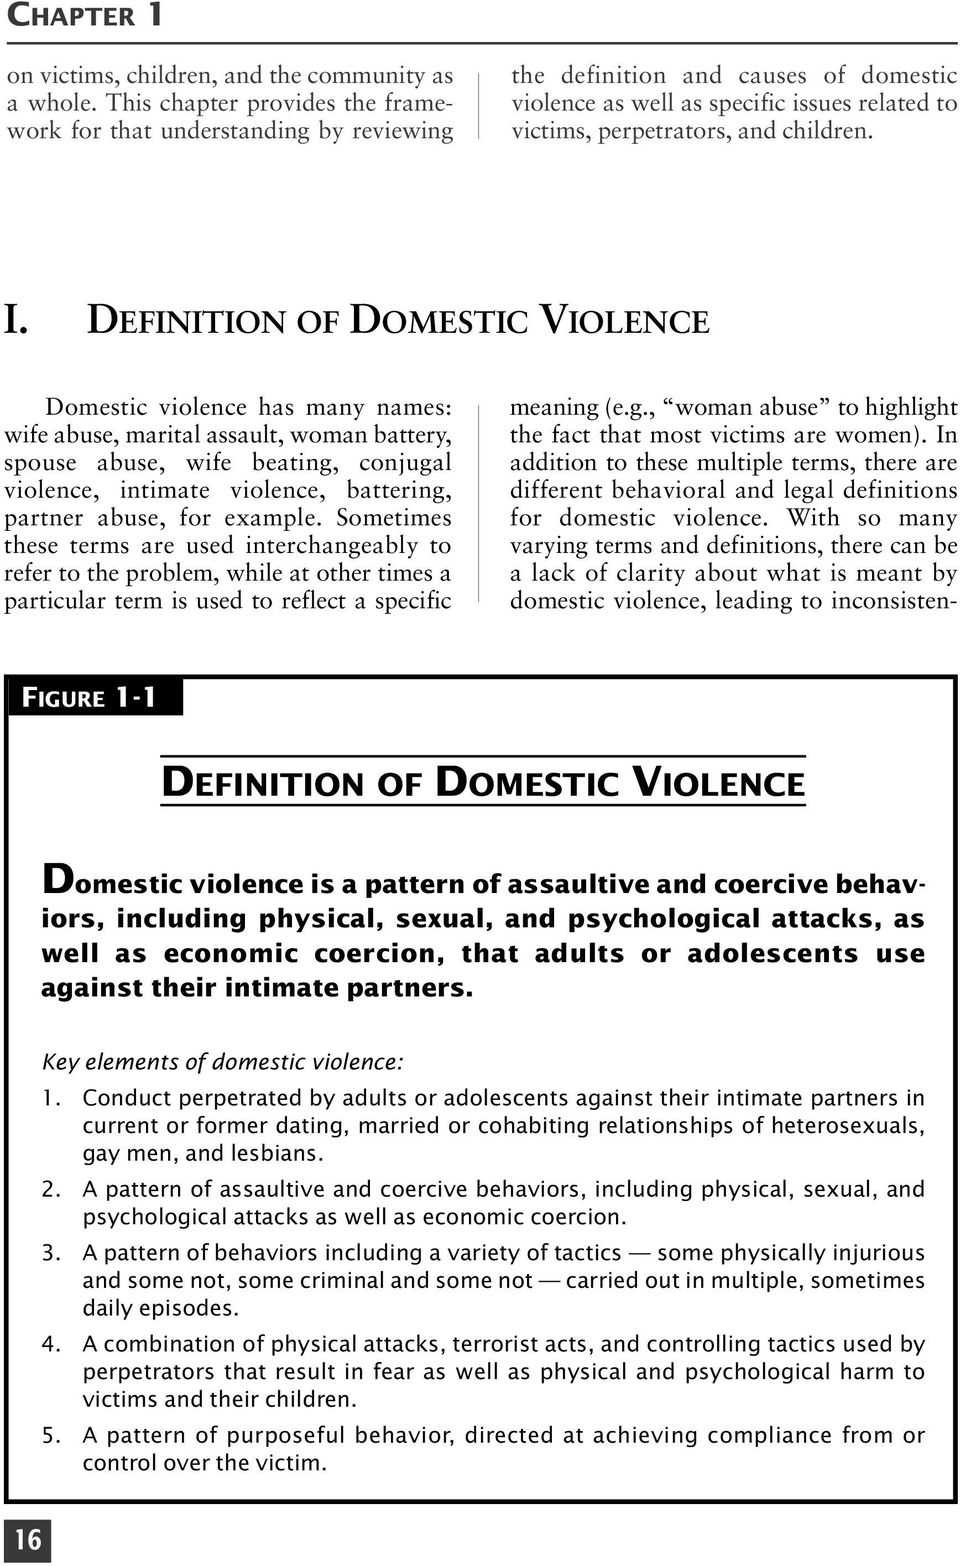 understanding domestic violence - pdf